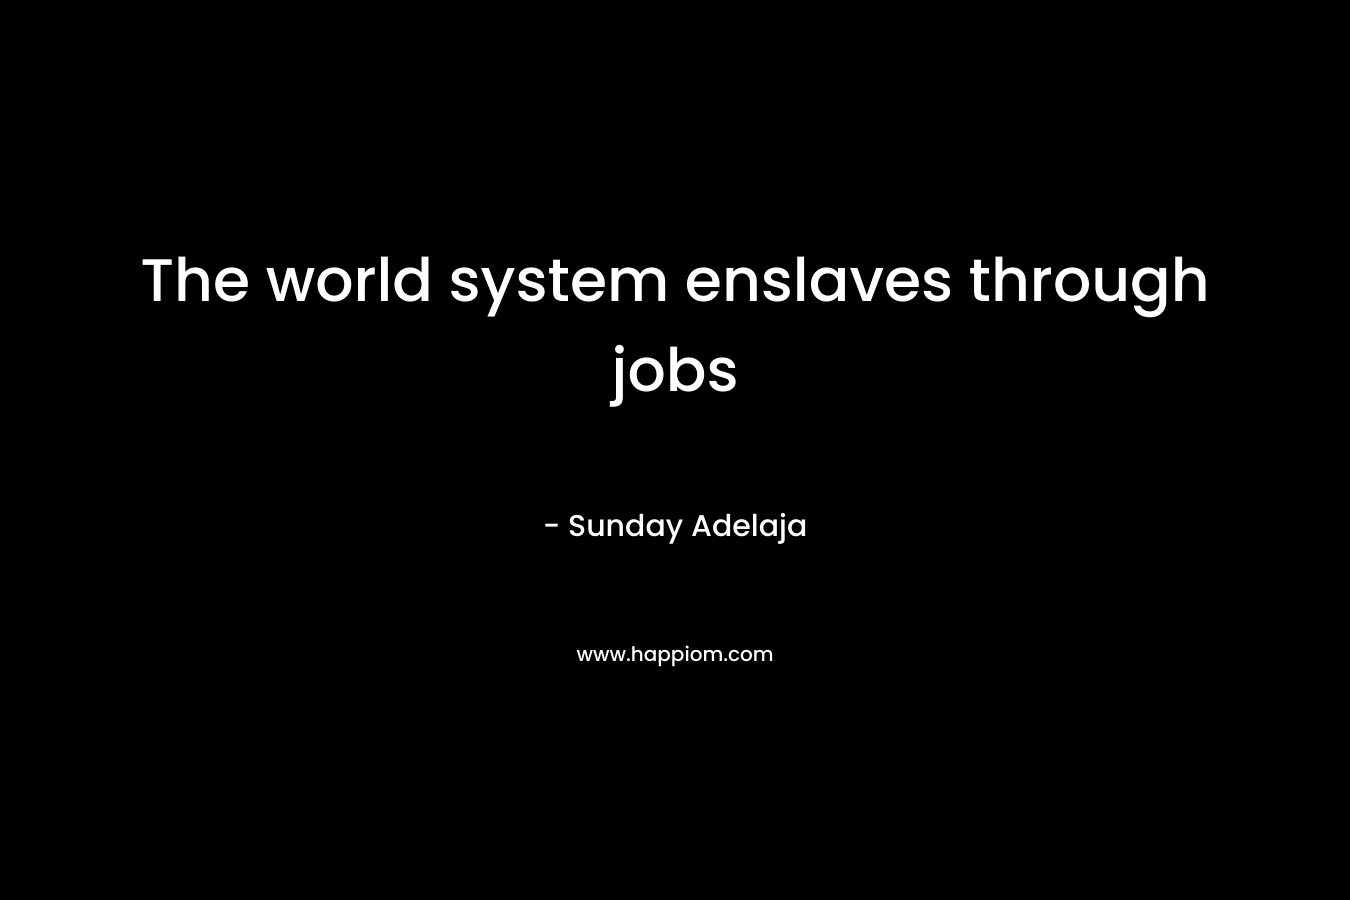 The world system enslaves through jobs